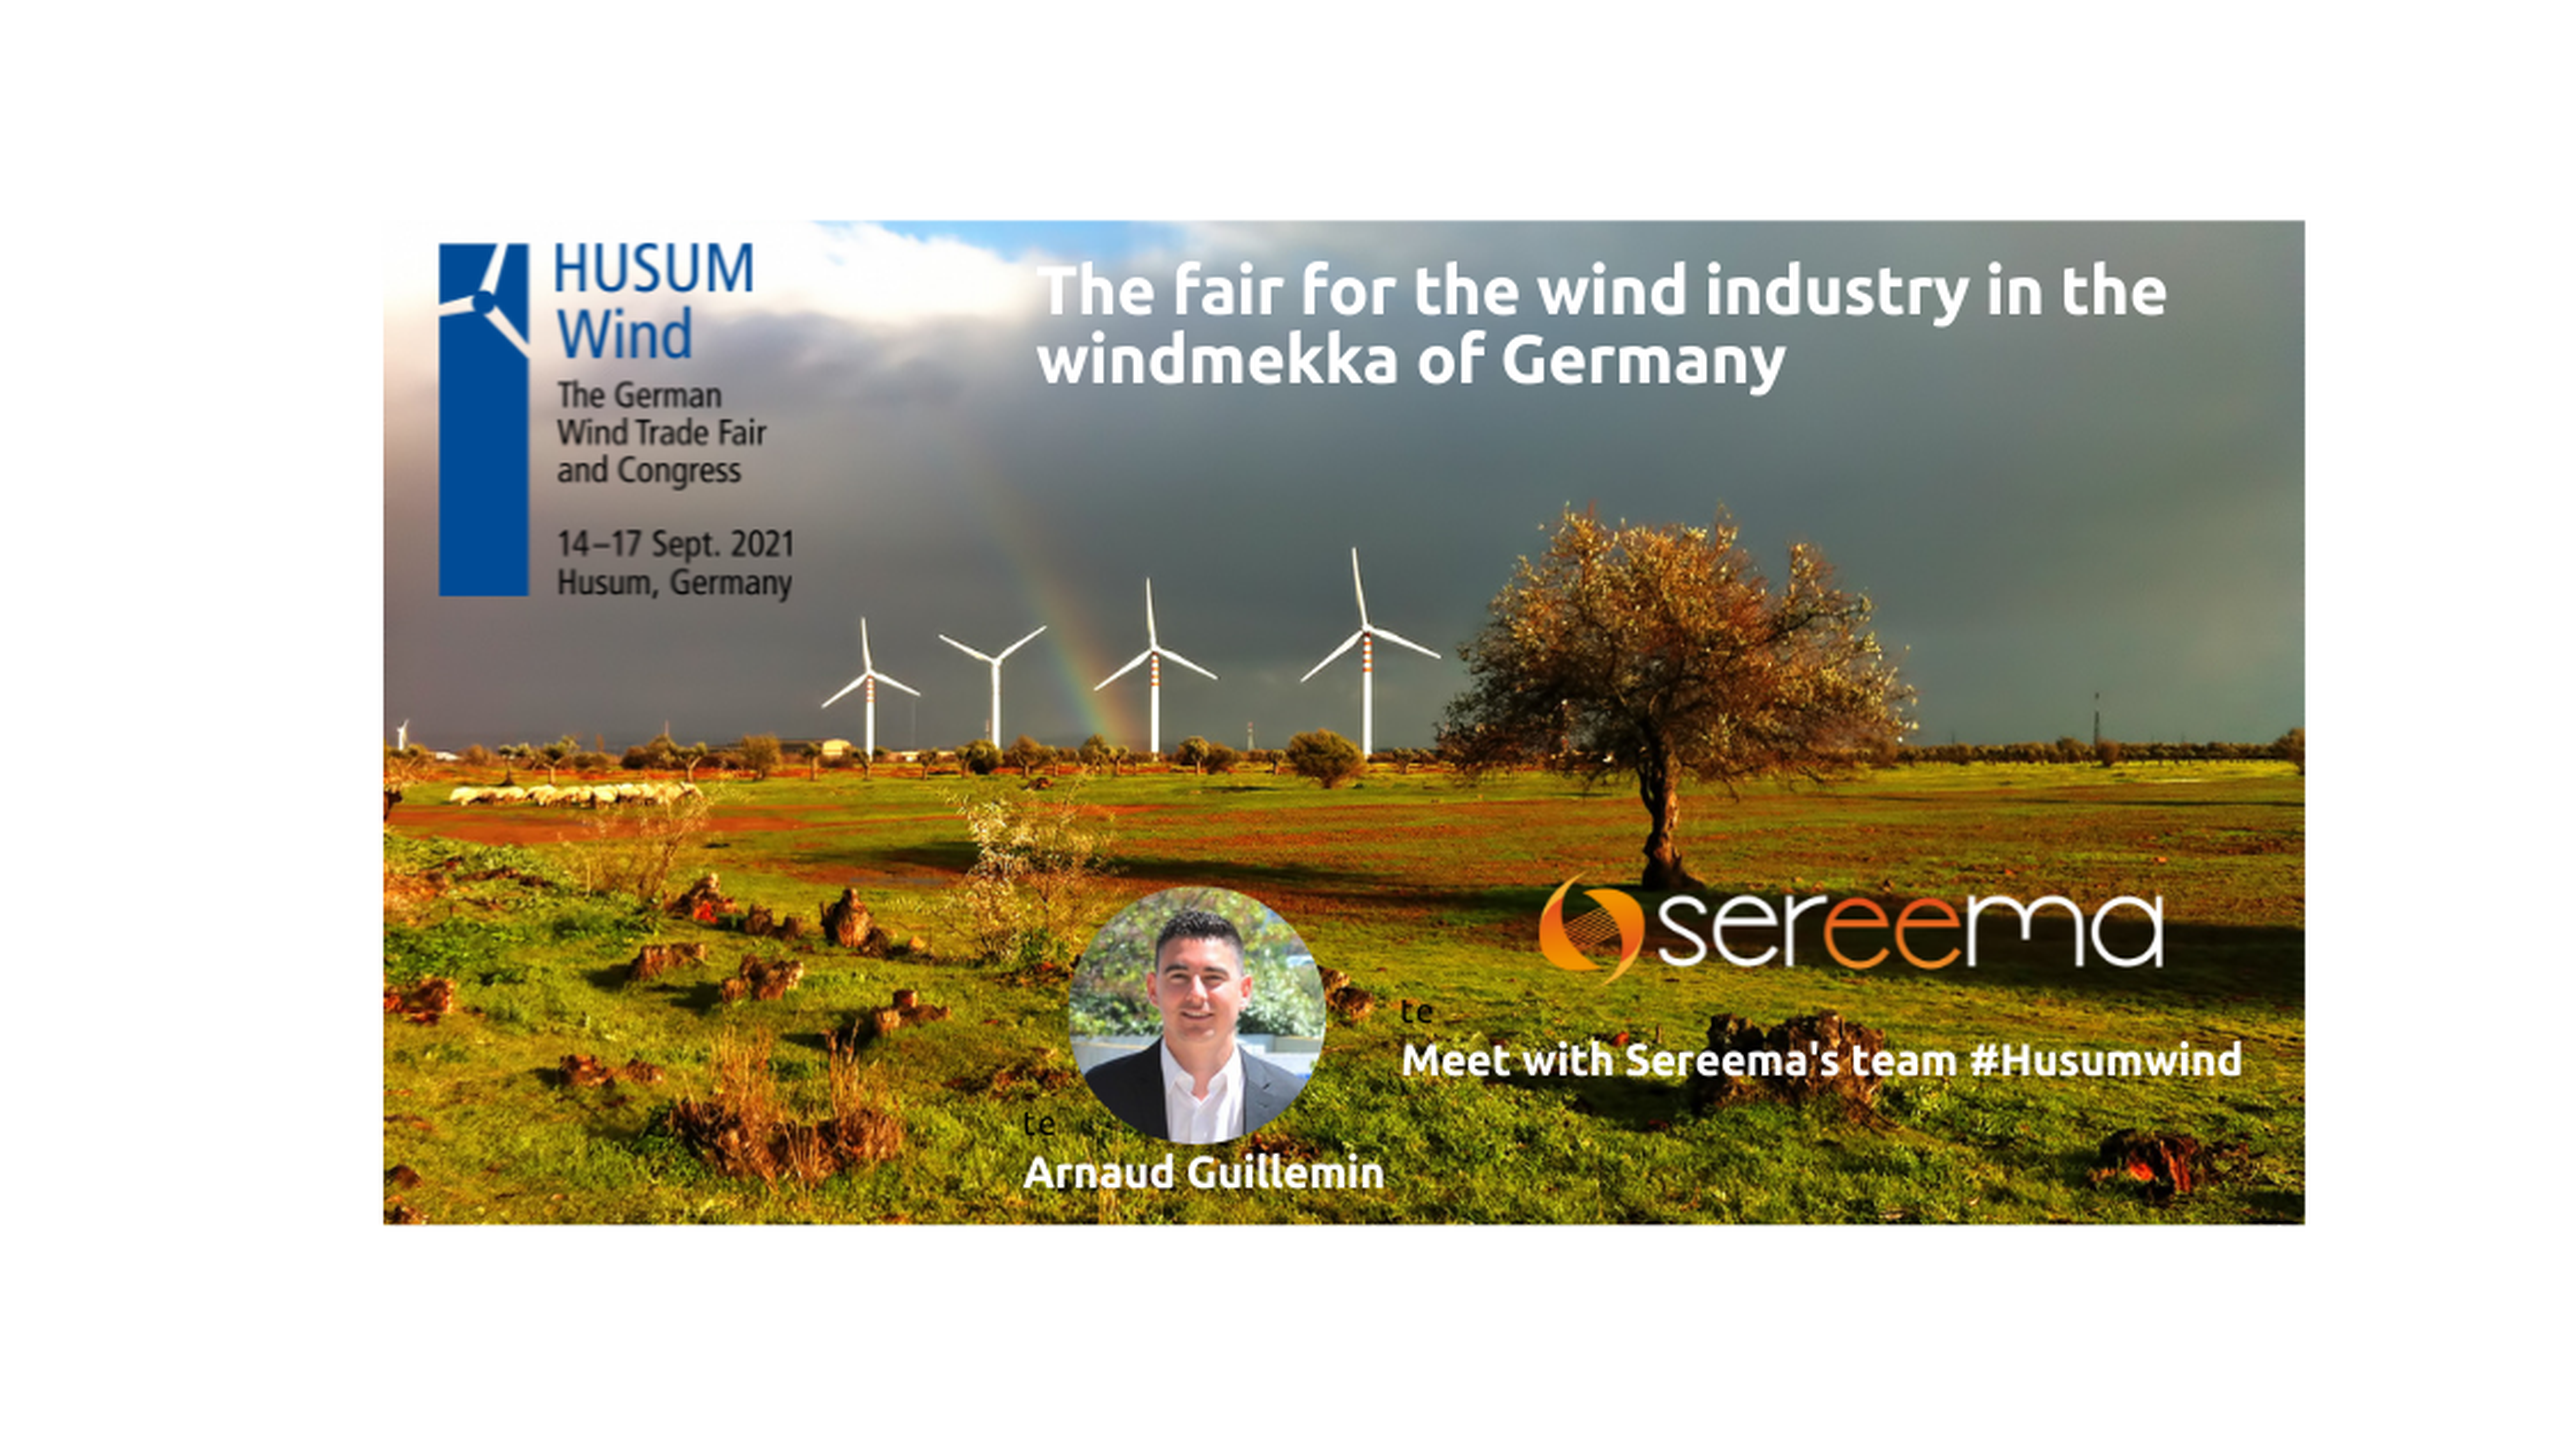 Meet Sereema at Husumwind the wind fair in the windmekka of Germany on Sept 14-17th 2021